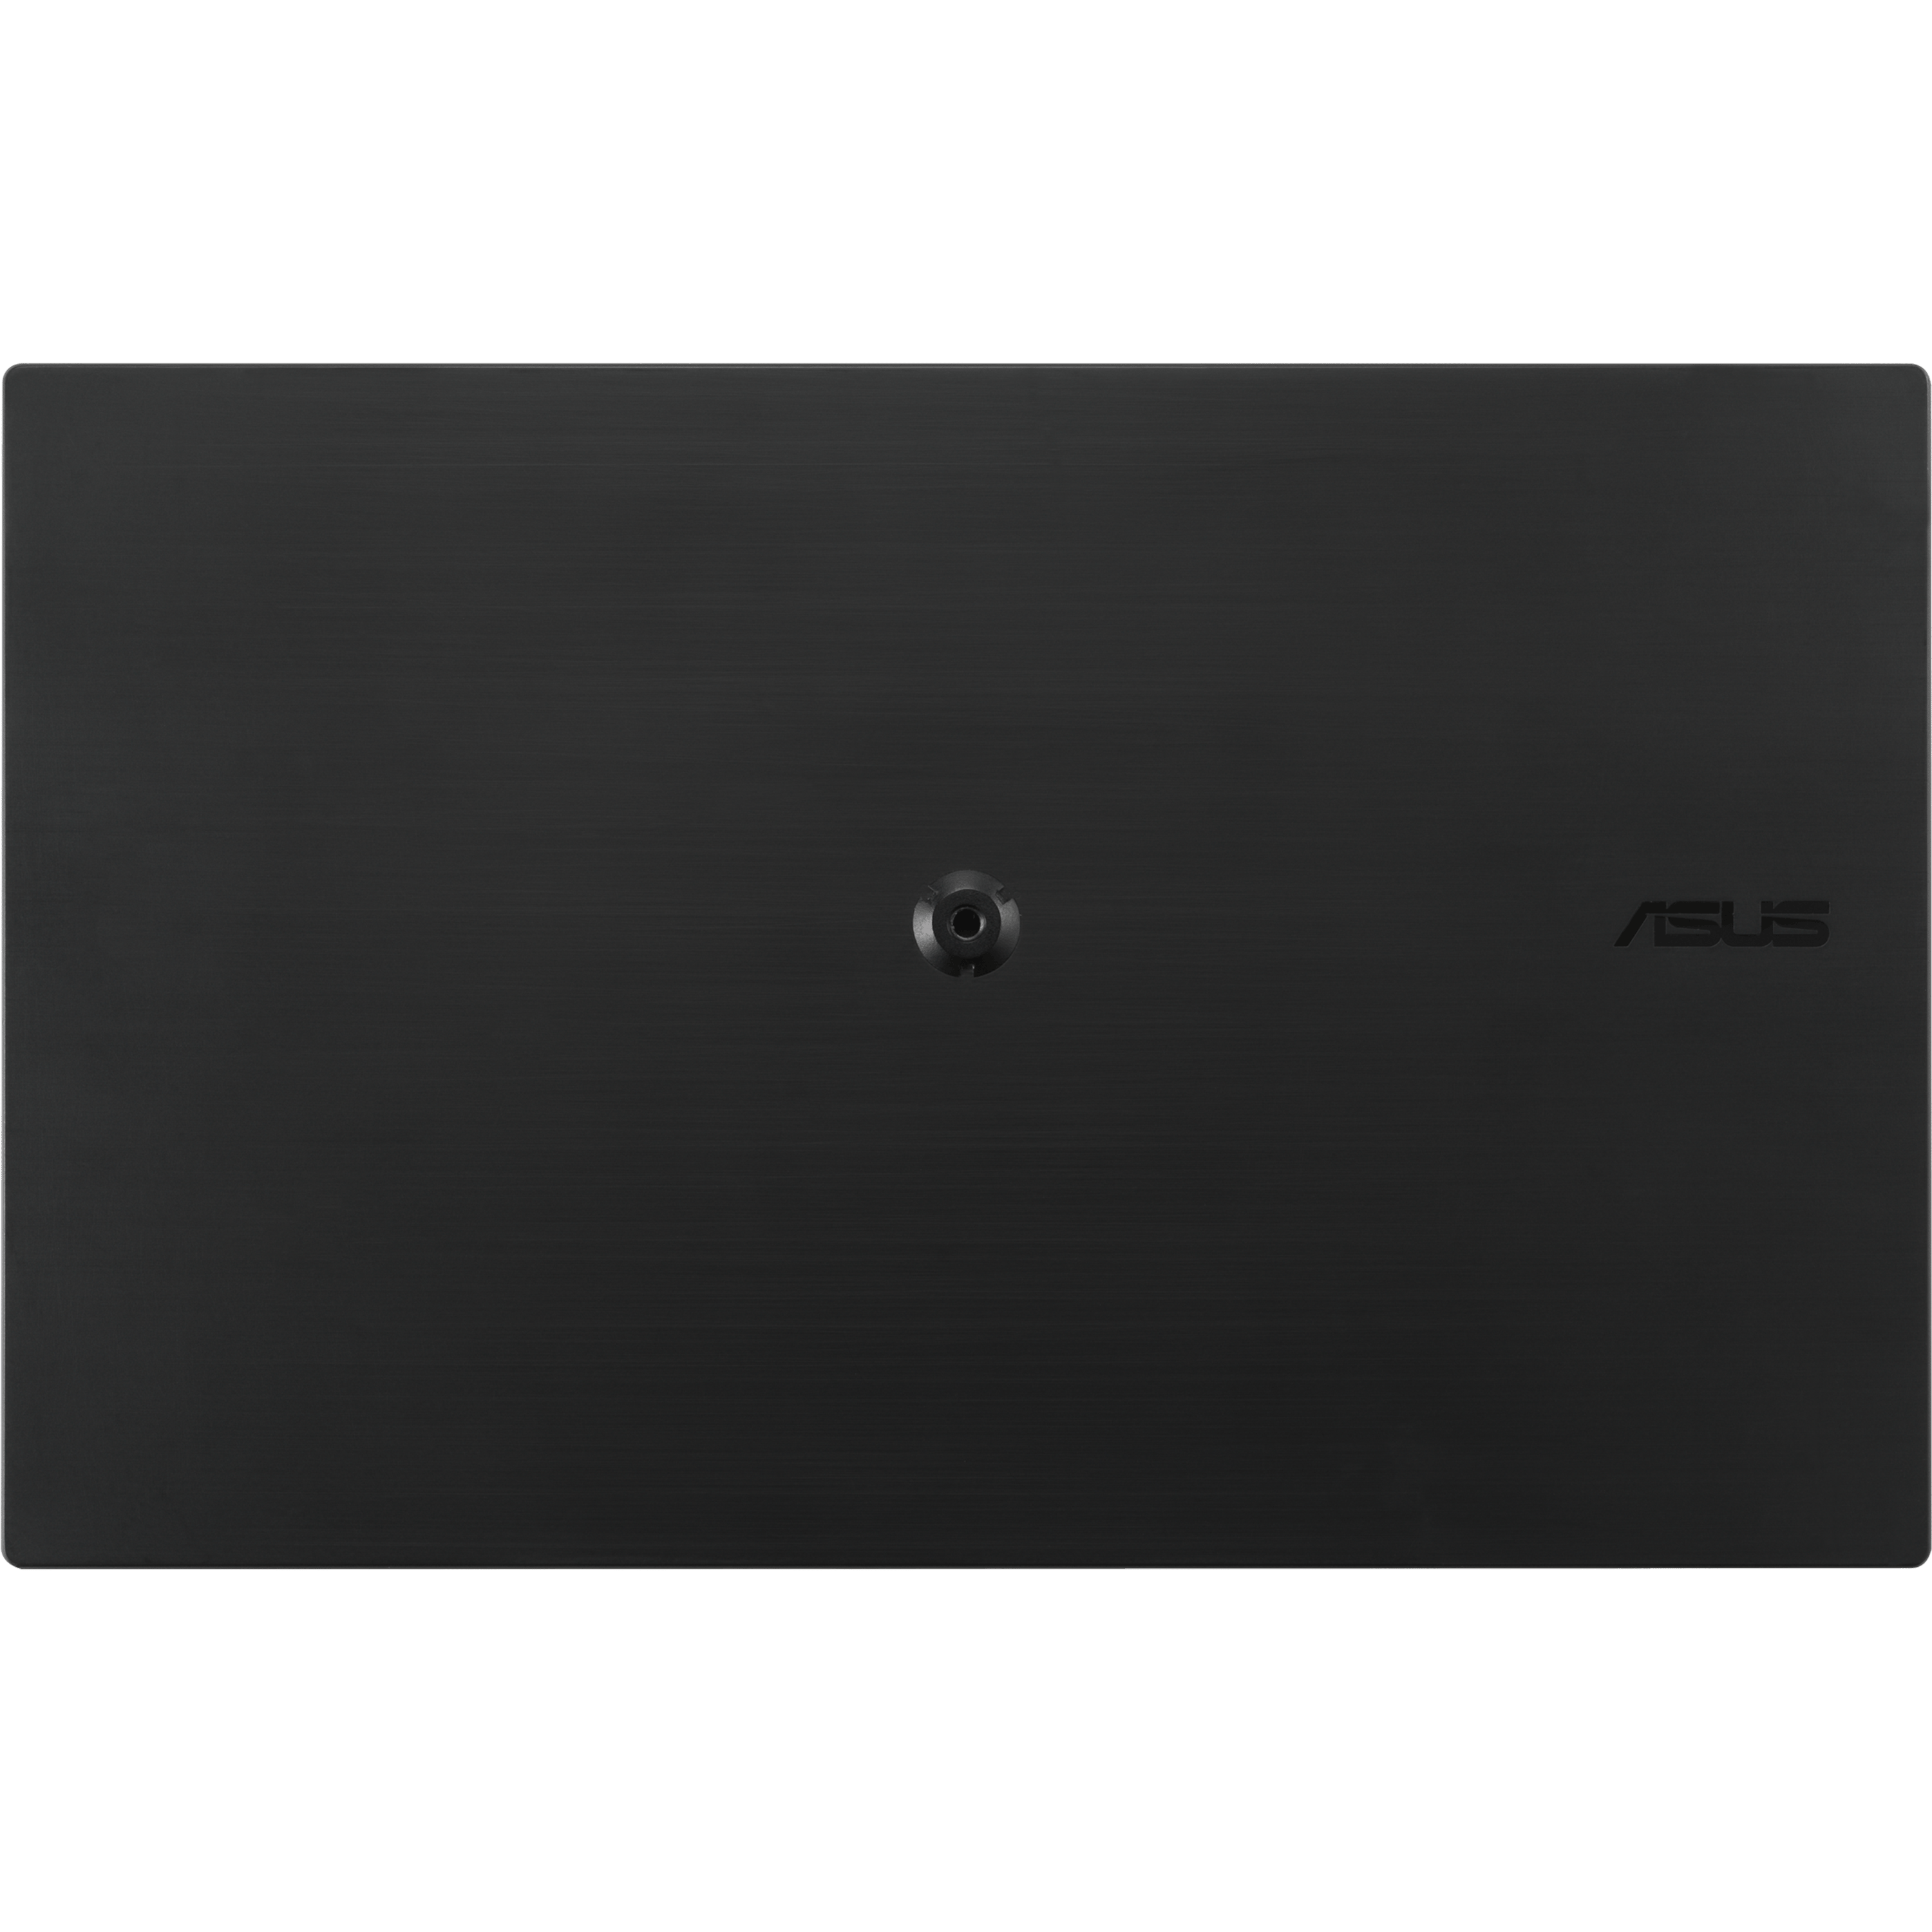 'ASUS MB166B BK/25MS 15.6''HD Portable USB MONITOR  מסך מחשב '